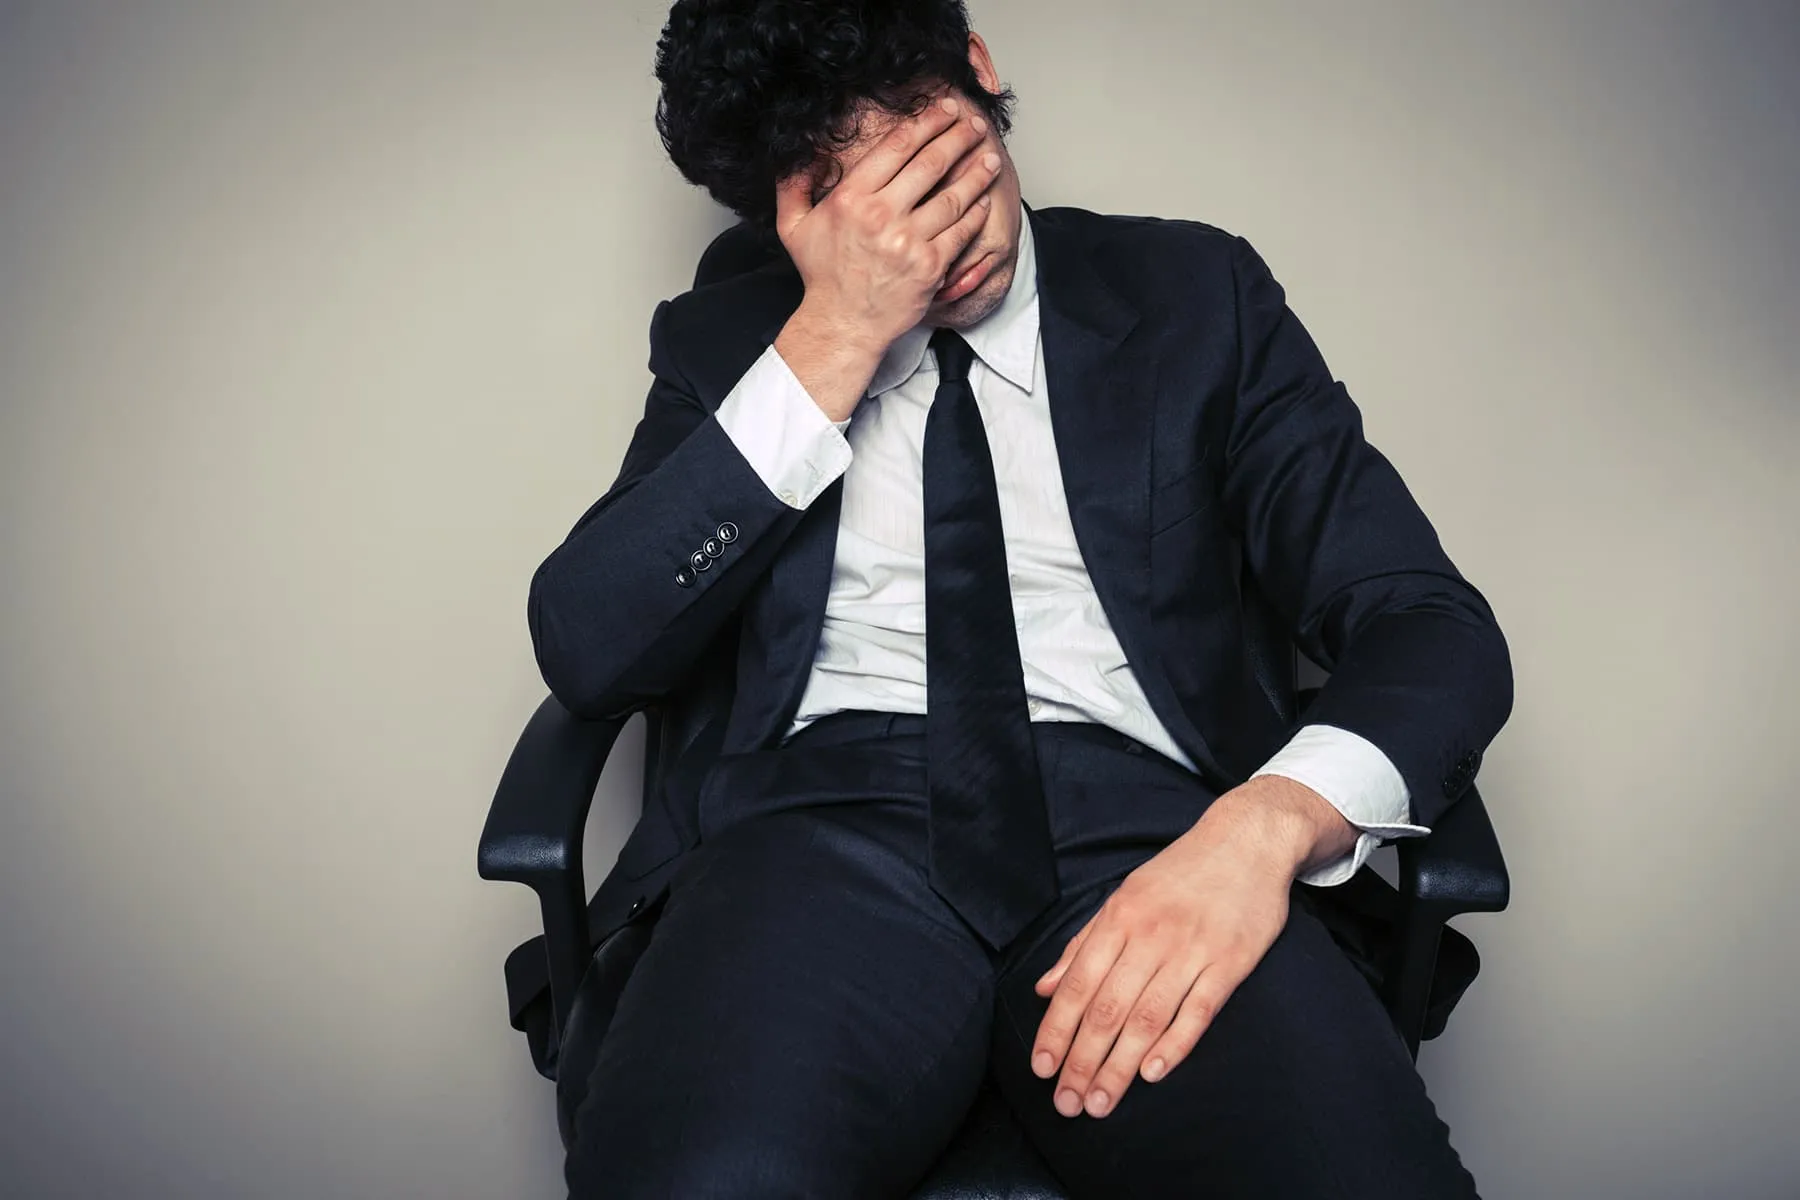 Work Stress Raises Men’s Risk of Heart Disease, Study Reports